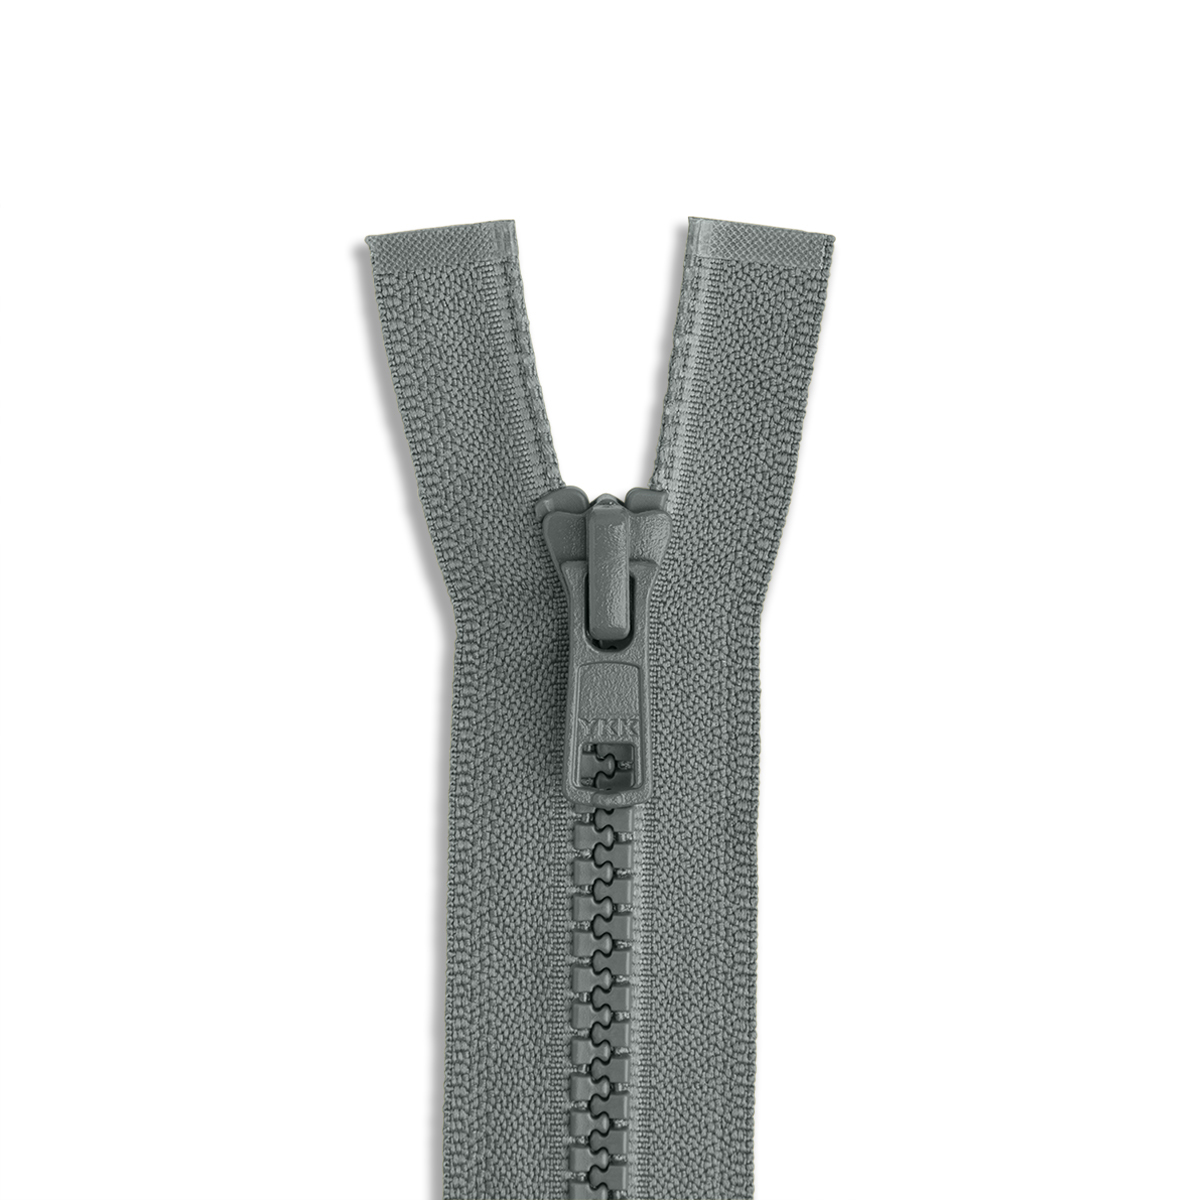 YKK Zipper Repair Kit - Sizes #3, 5, 8 & 10 - WAWAK Sewing Supplies